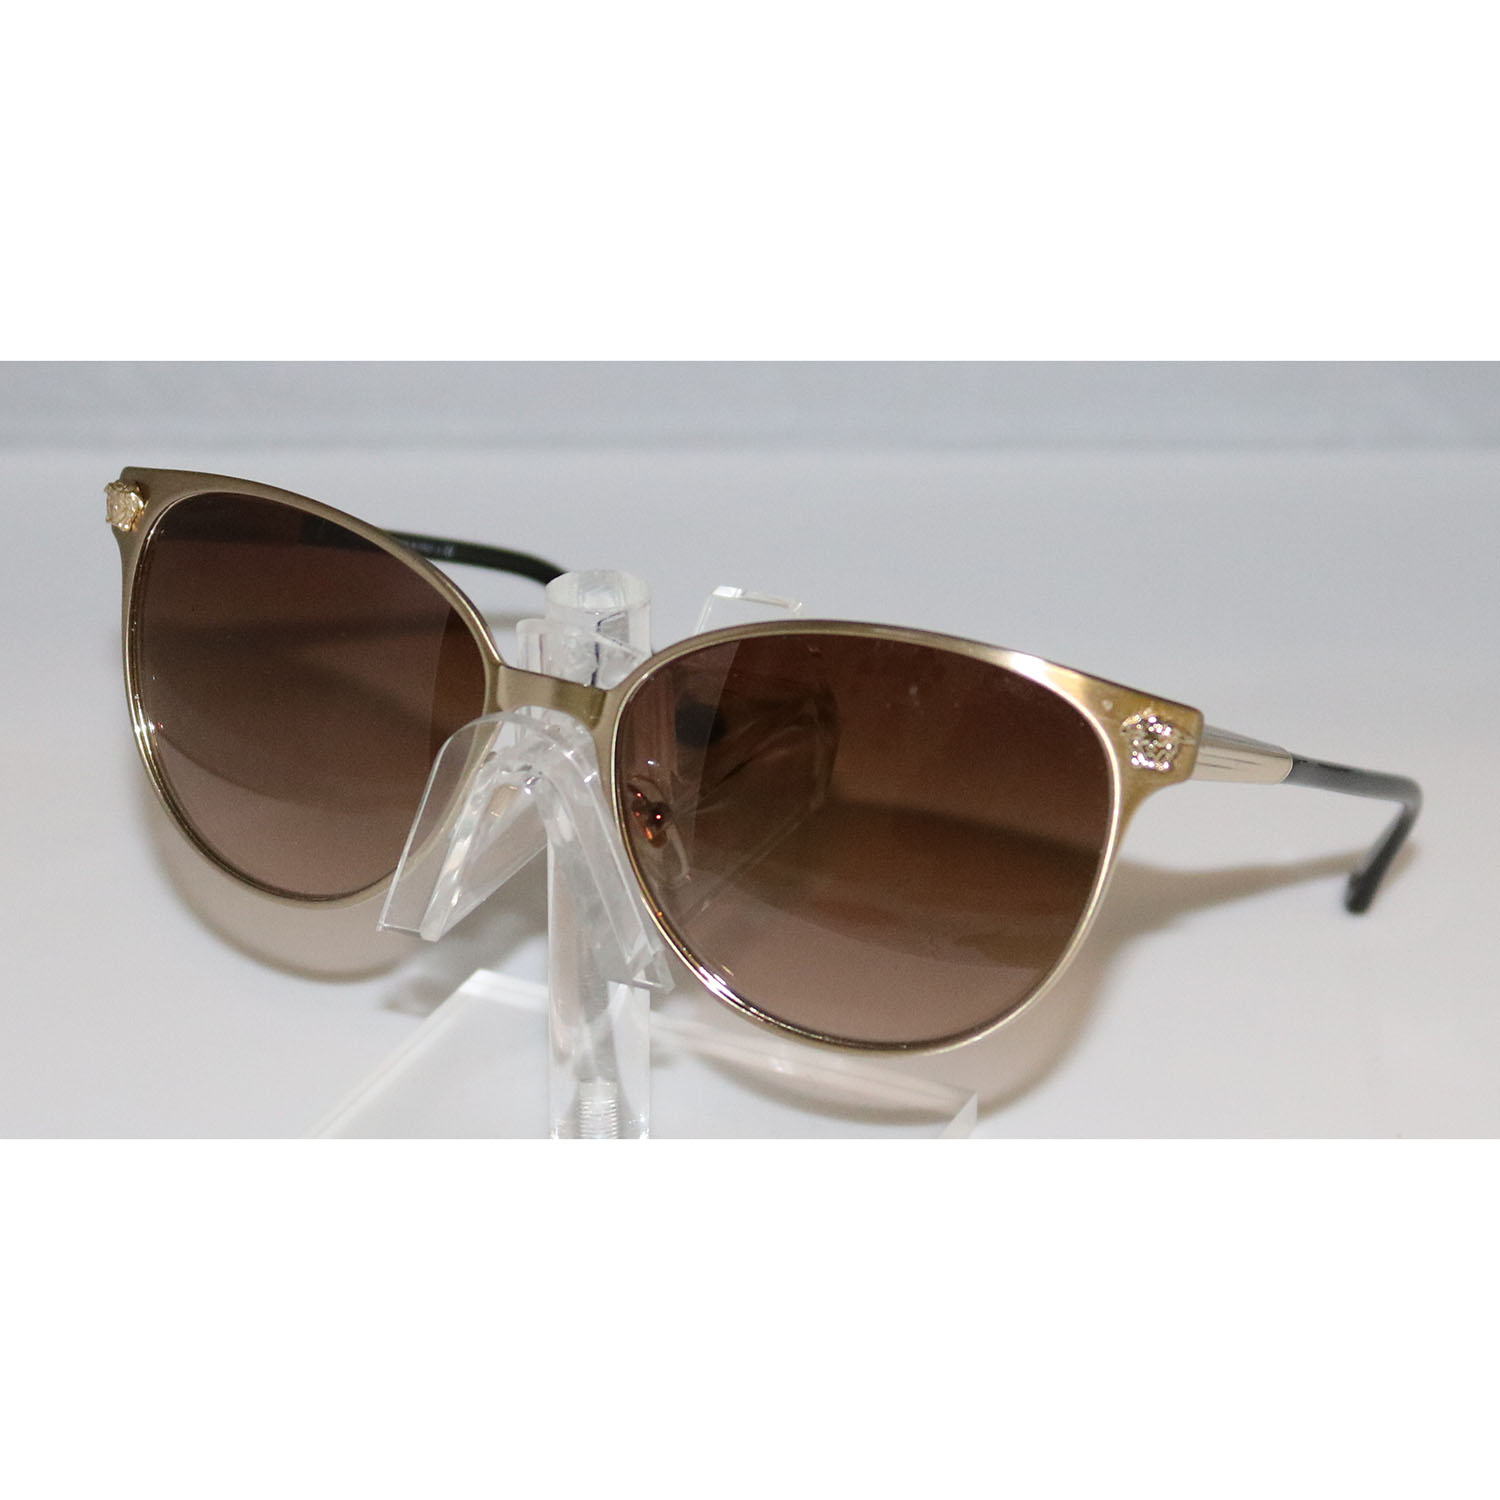 versace 2168 sunglasses